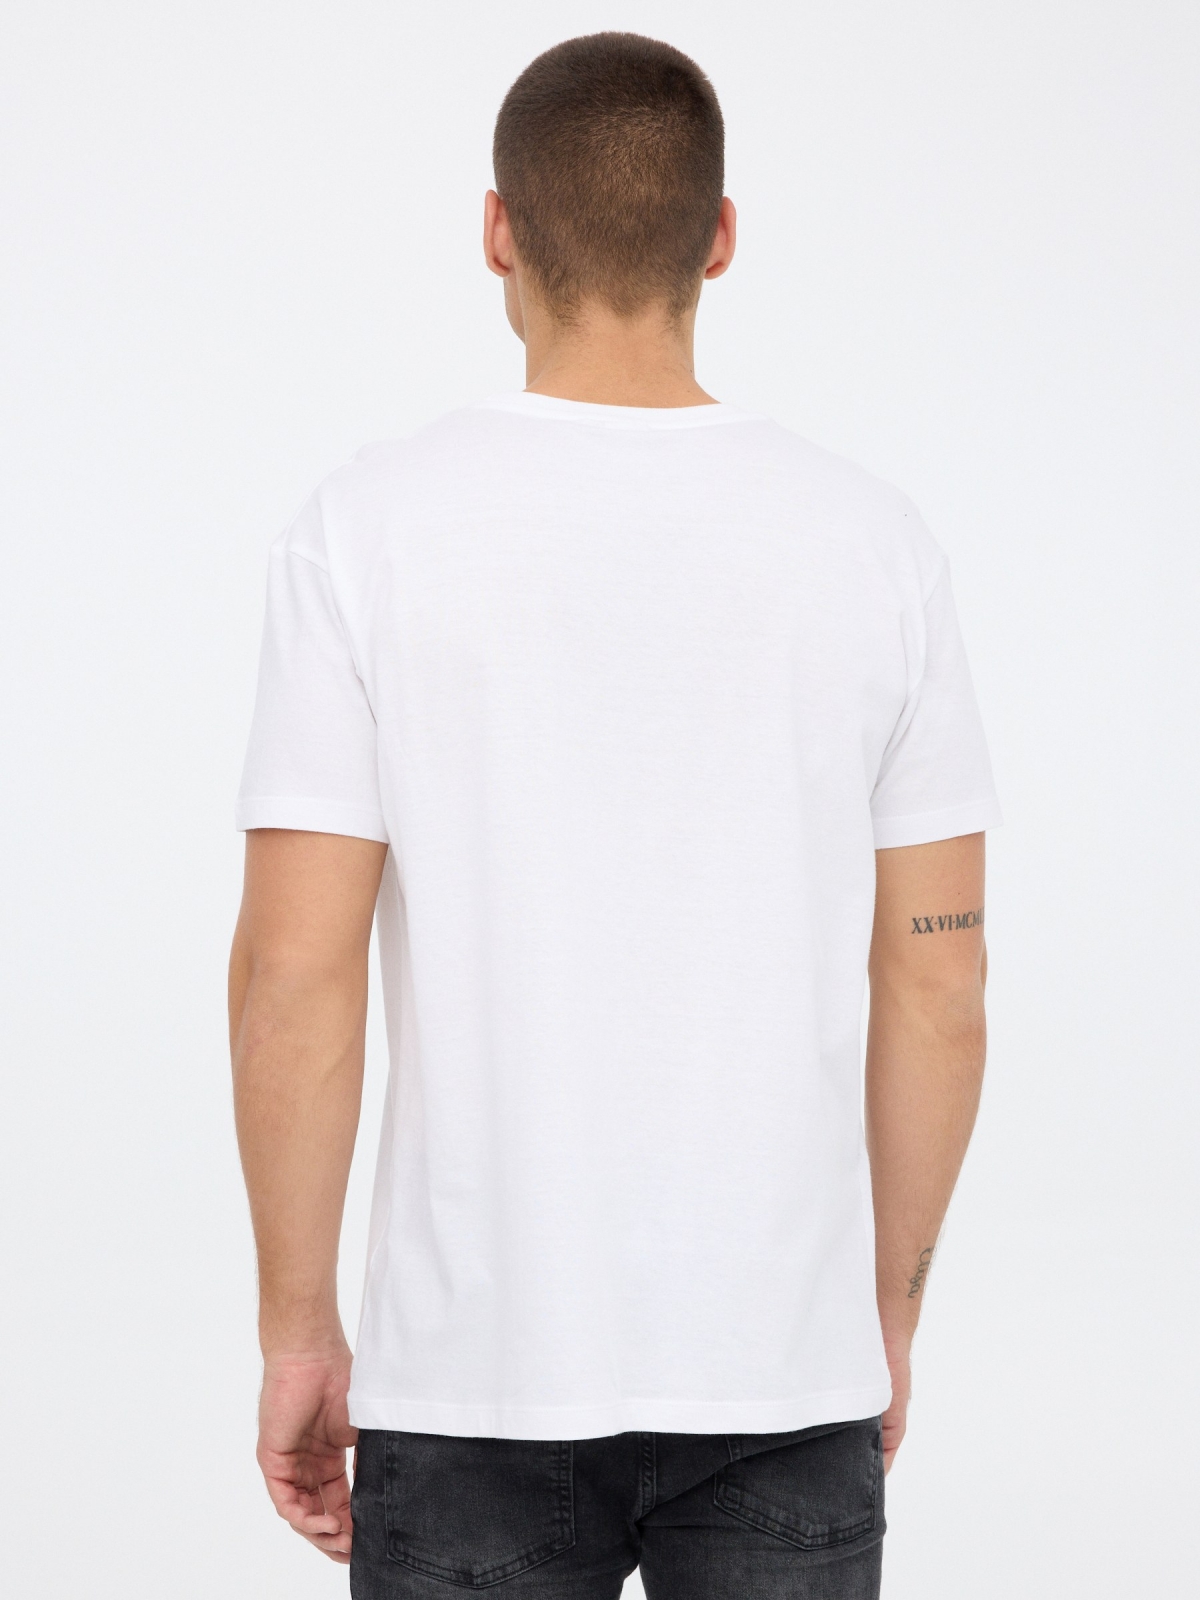 T-shirt Mandaloriana branco vista meia traseira